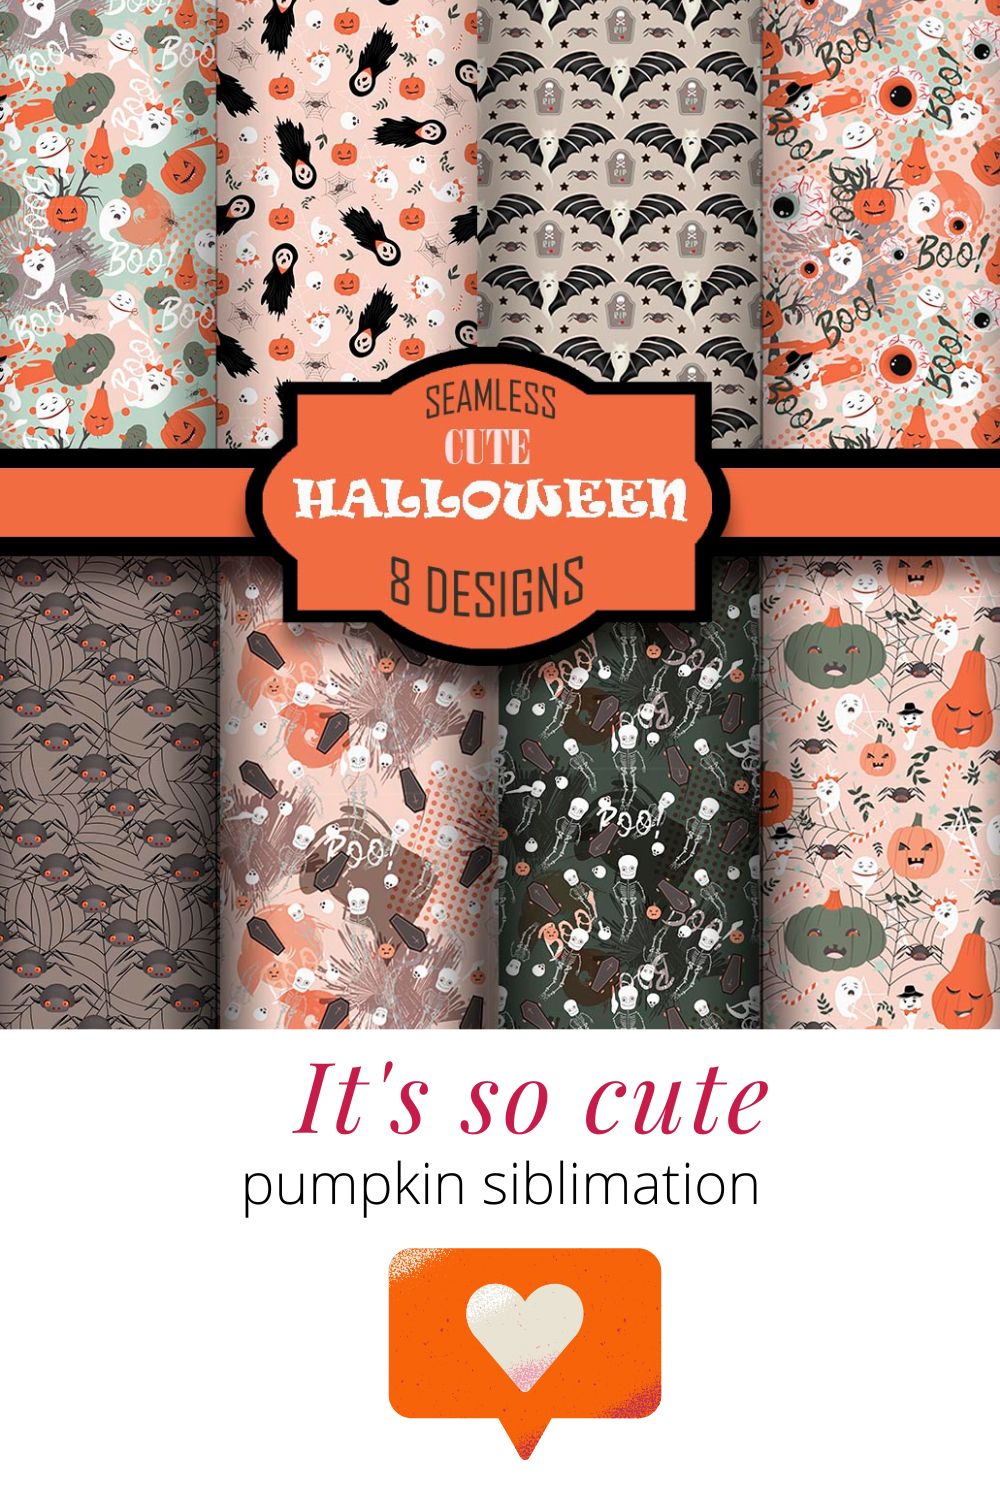 Pumpkin and Ghost Print Halloween Spooky Pattern pinterest image.